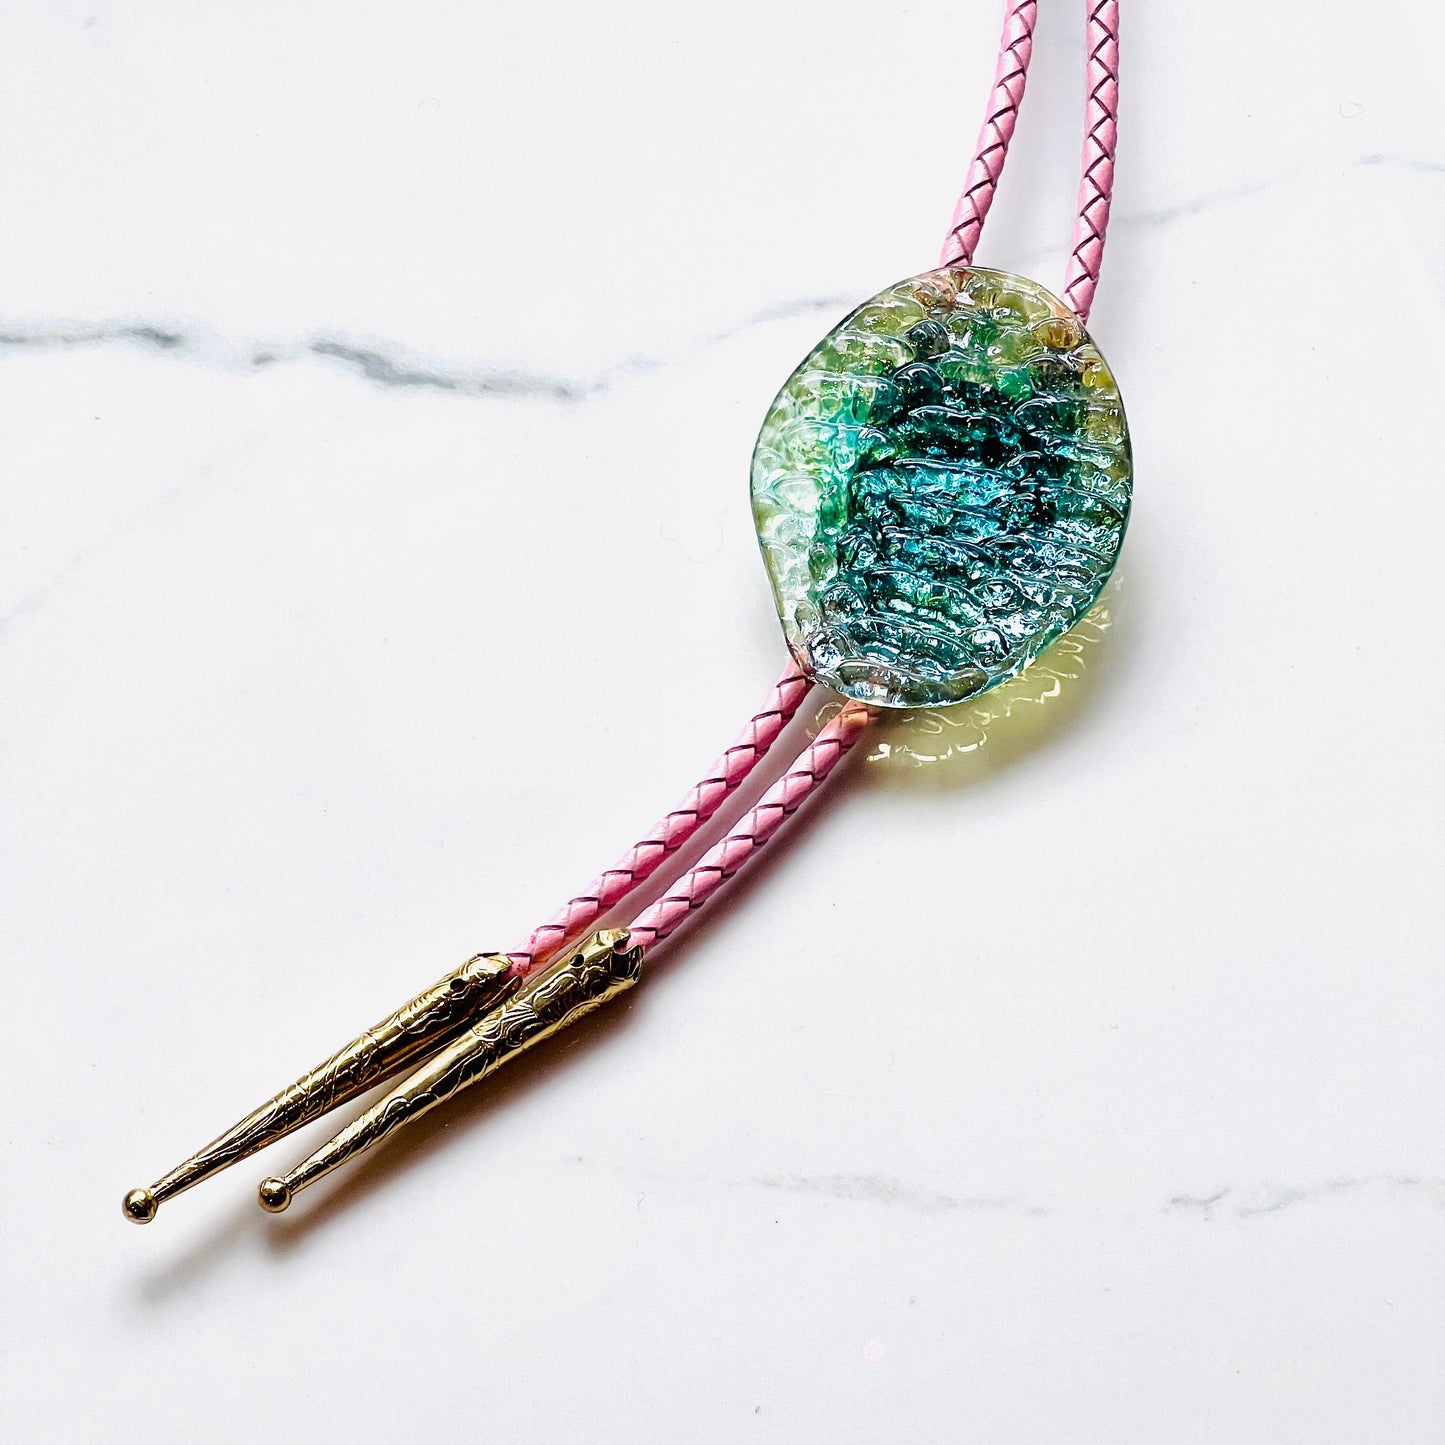 Bolo Tie/Necklace- hot glass medallion